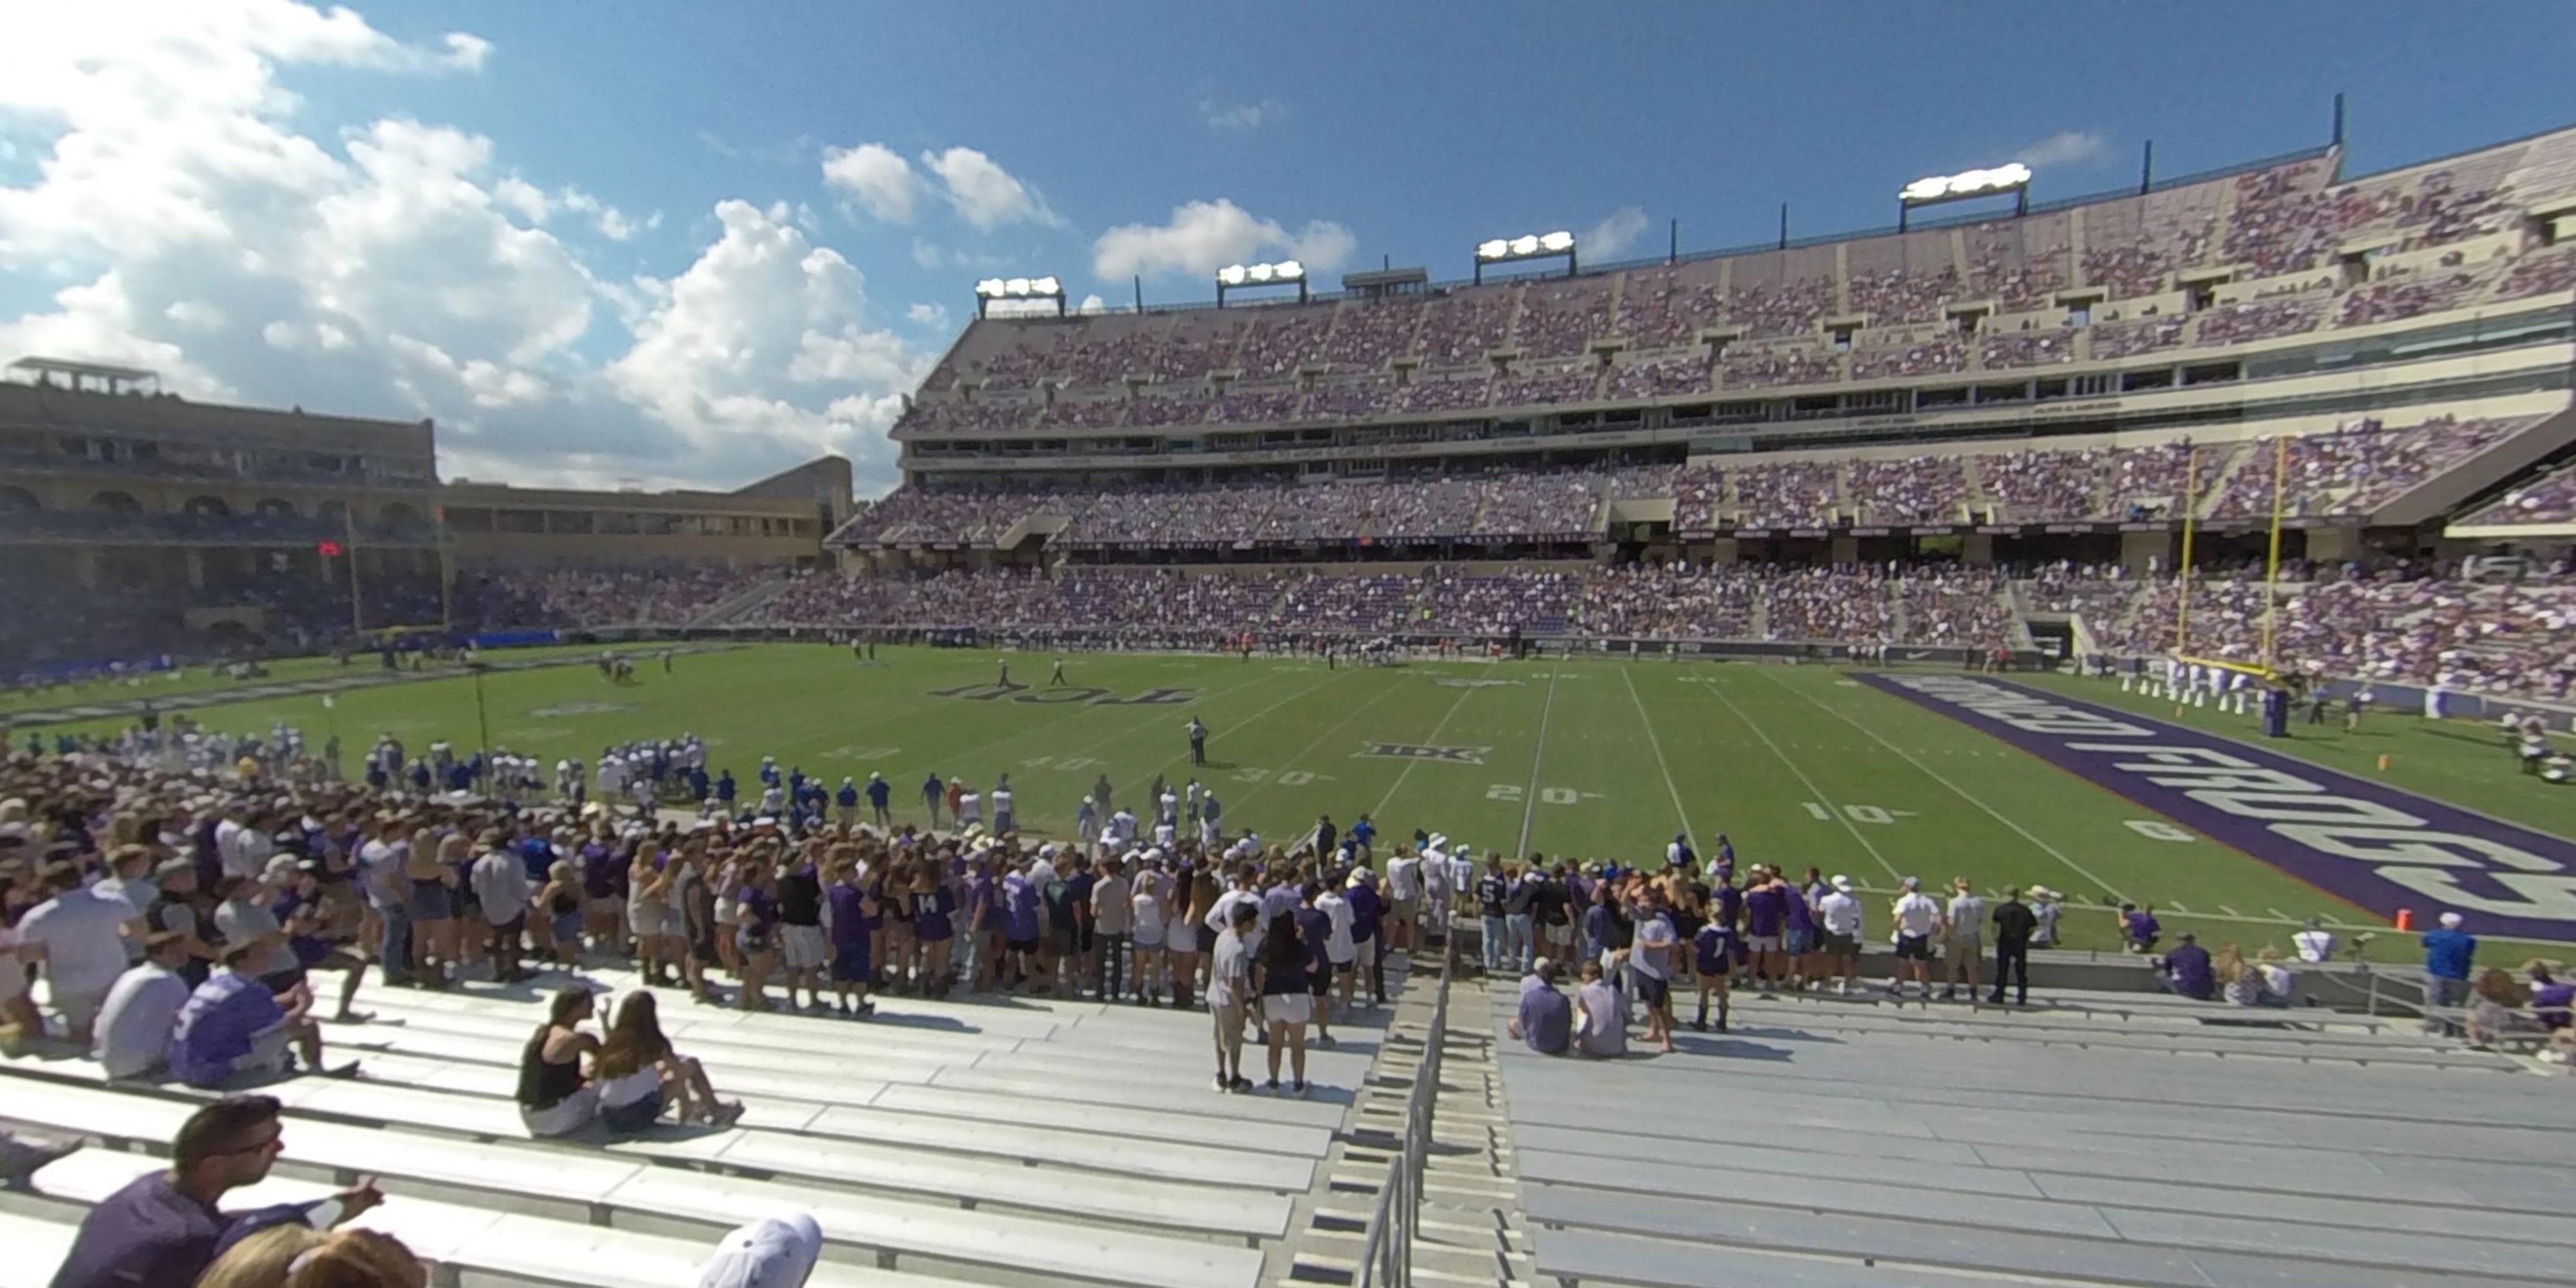 section 122 panoramic seat view  - amon carter stadium